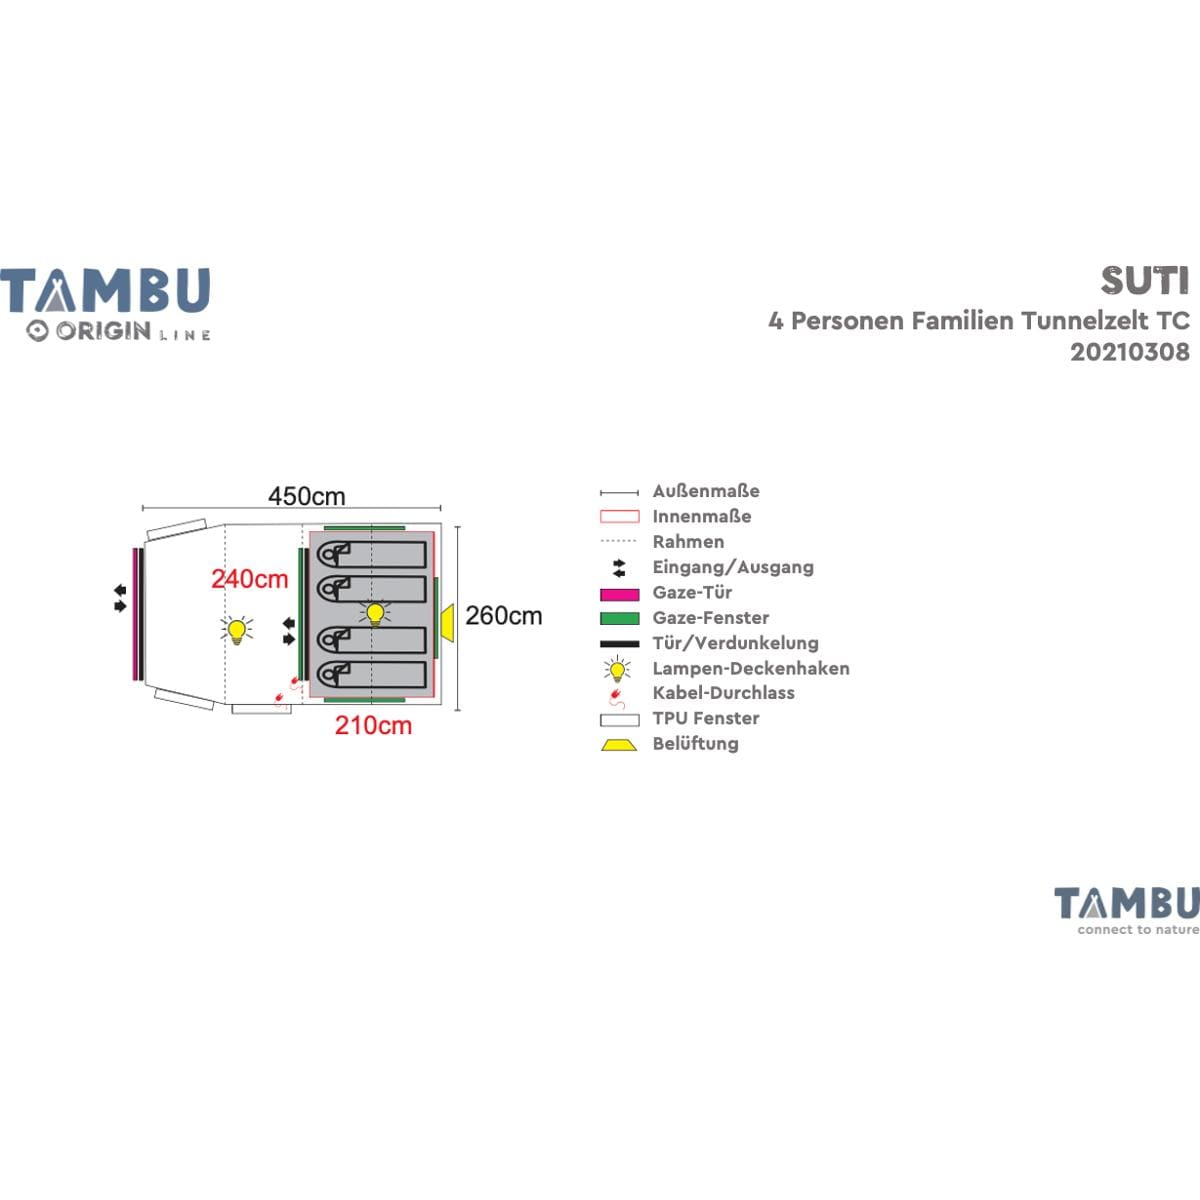 Tambu Suti Familien Tunnelzelt Camping TC, bei grau/blau Campingzubehör 4 Personen, 450x260x195cm, Wagner